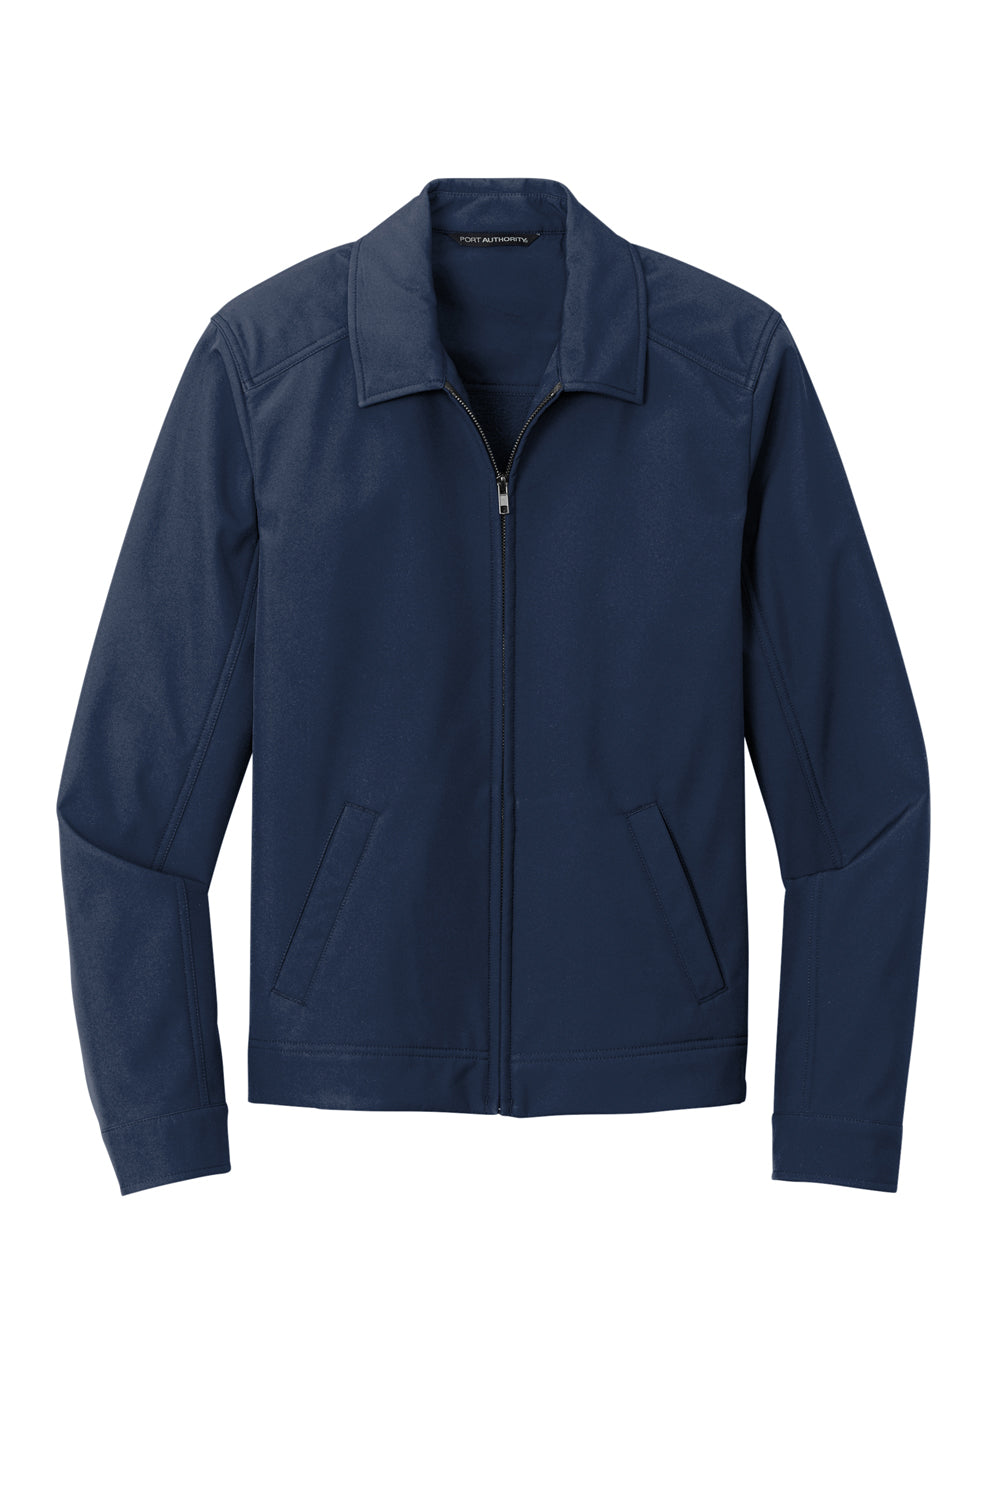 Port Authority J417 Mechanic Full Zip Soft Shell Jacket Dress Navy Blue Flat Front